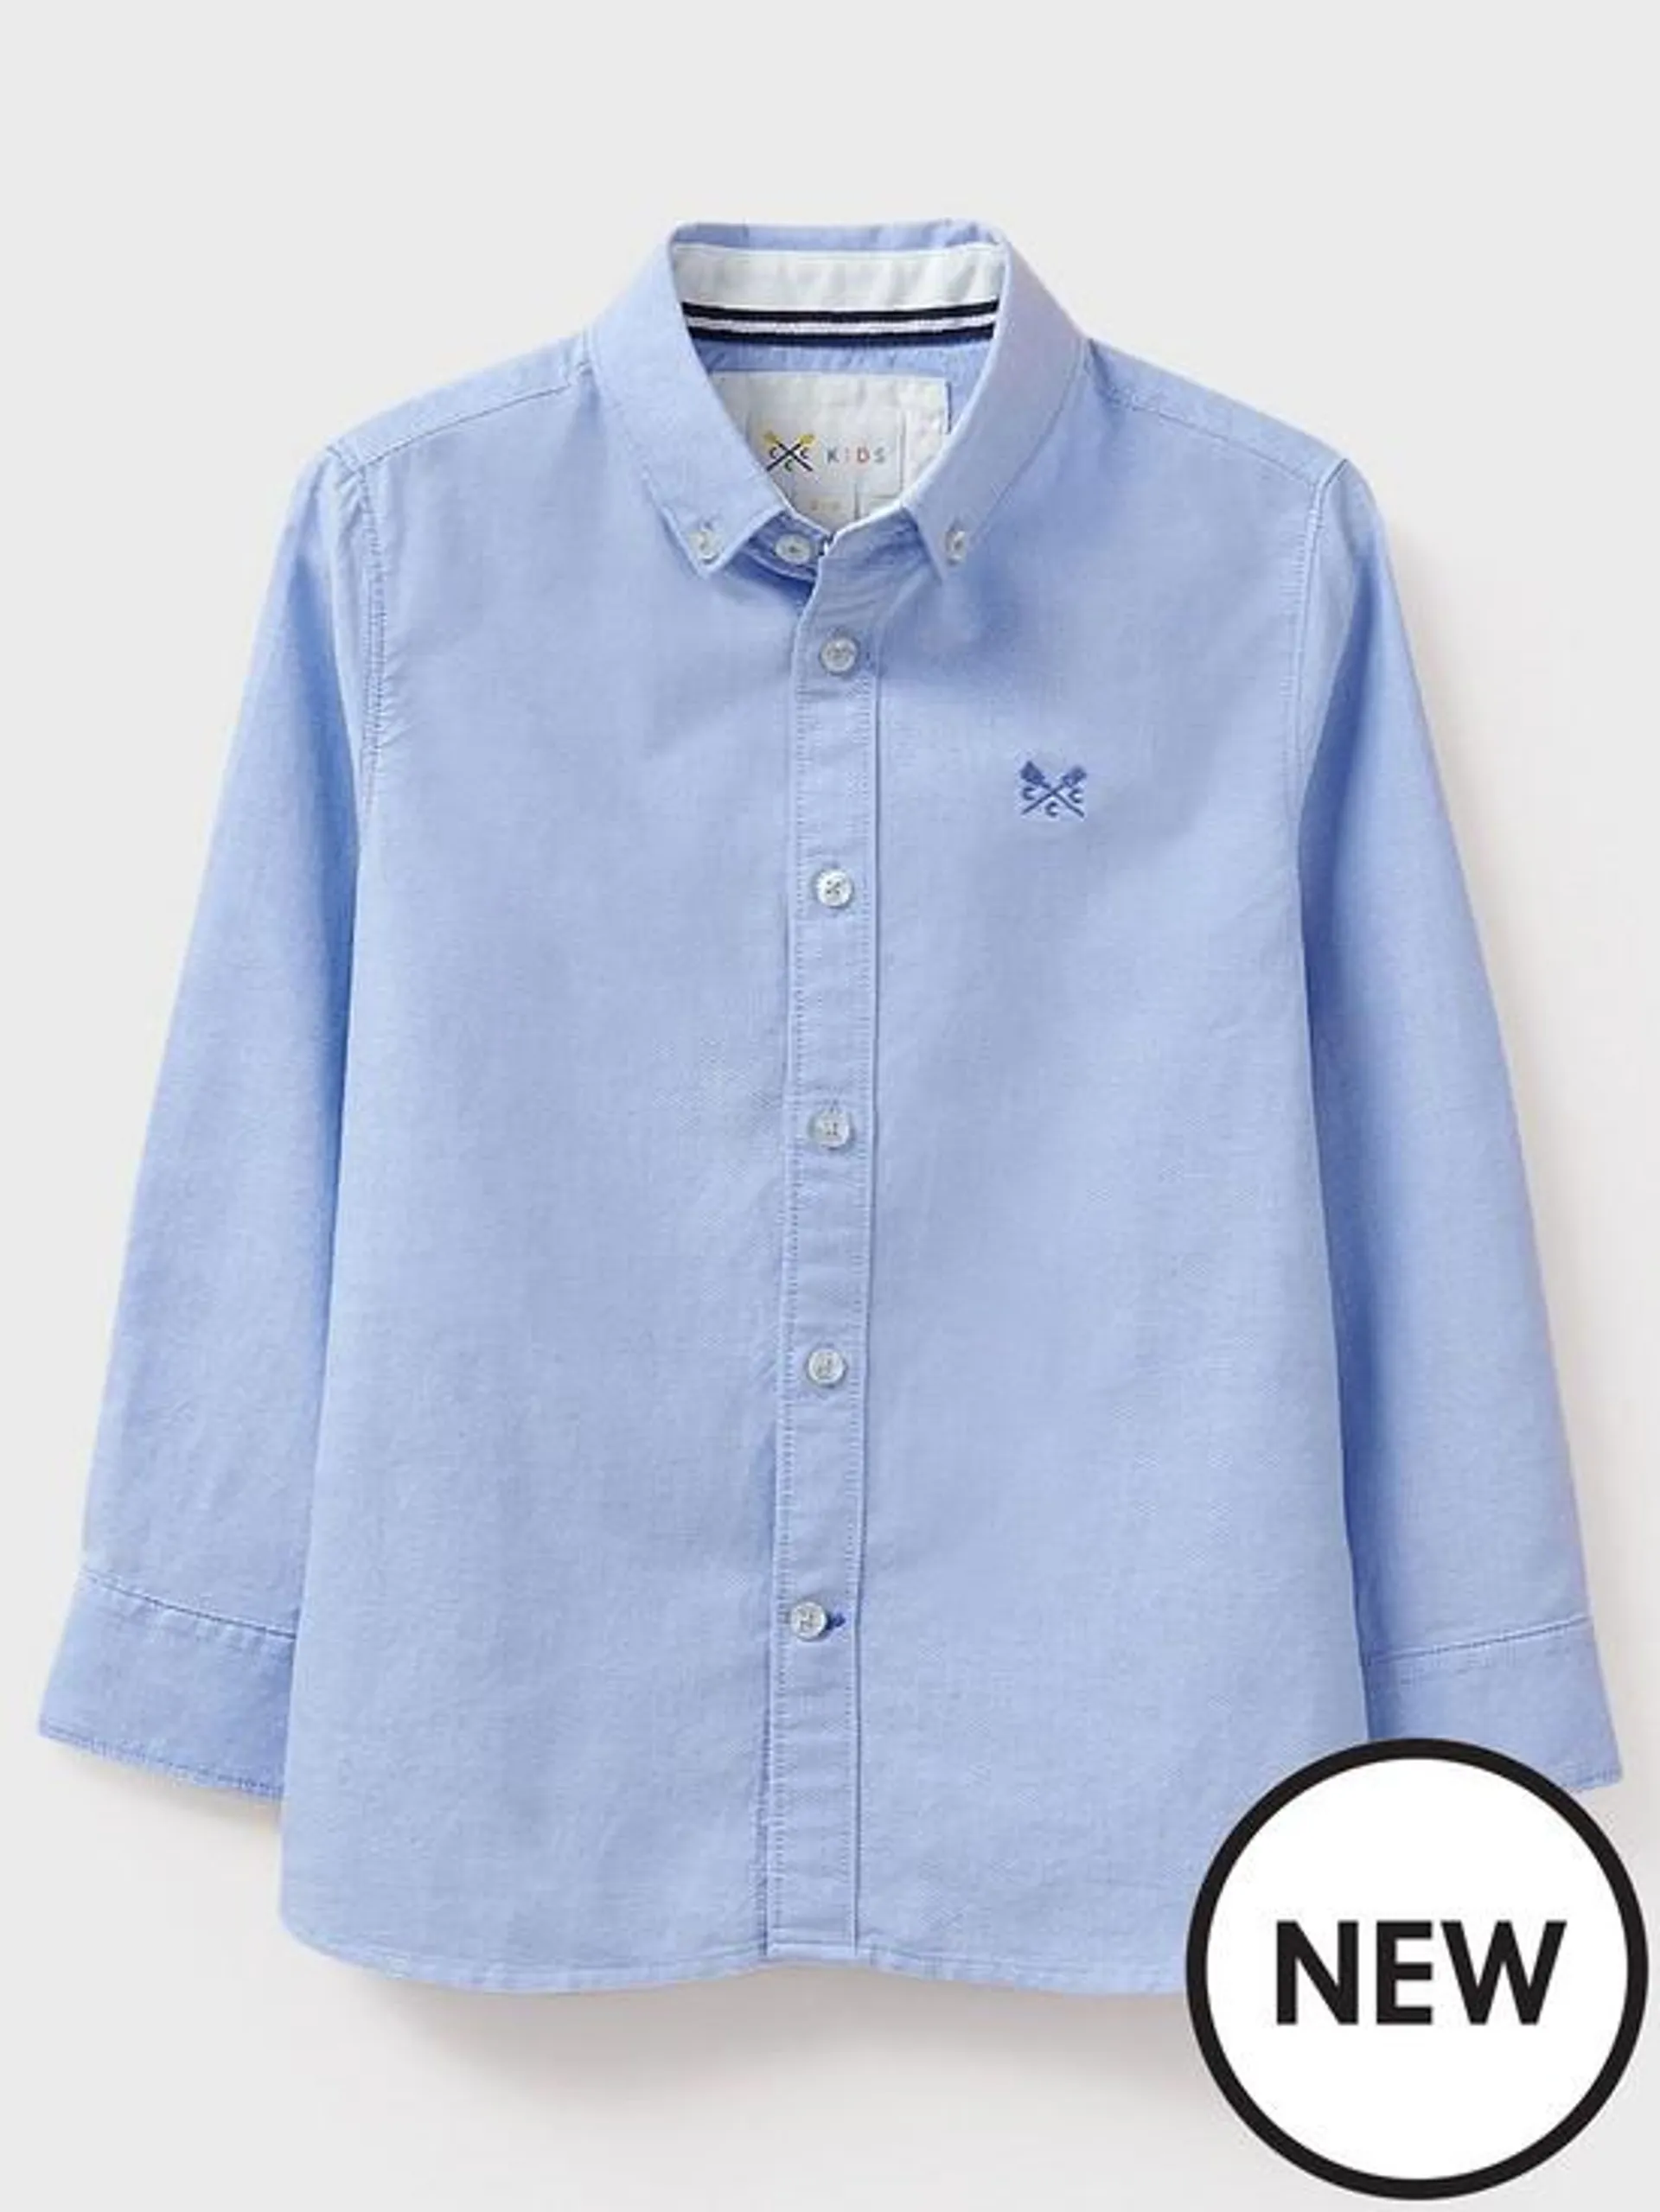 Boys Long Sleeve Oxford Shirt - Light Blue